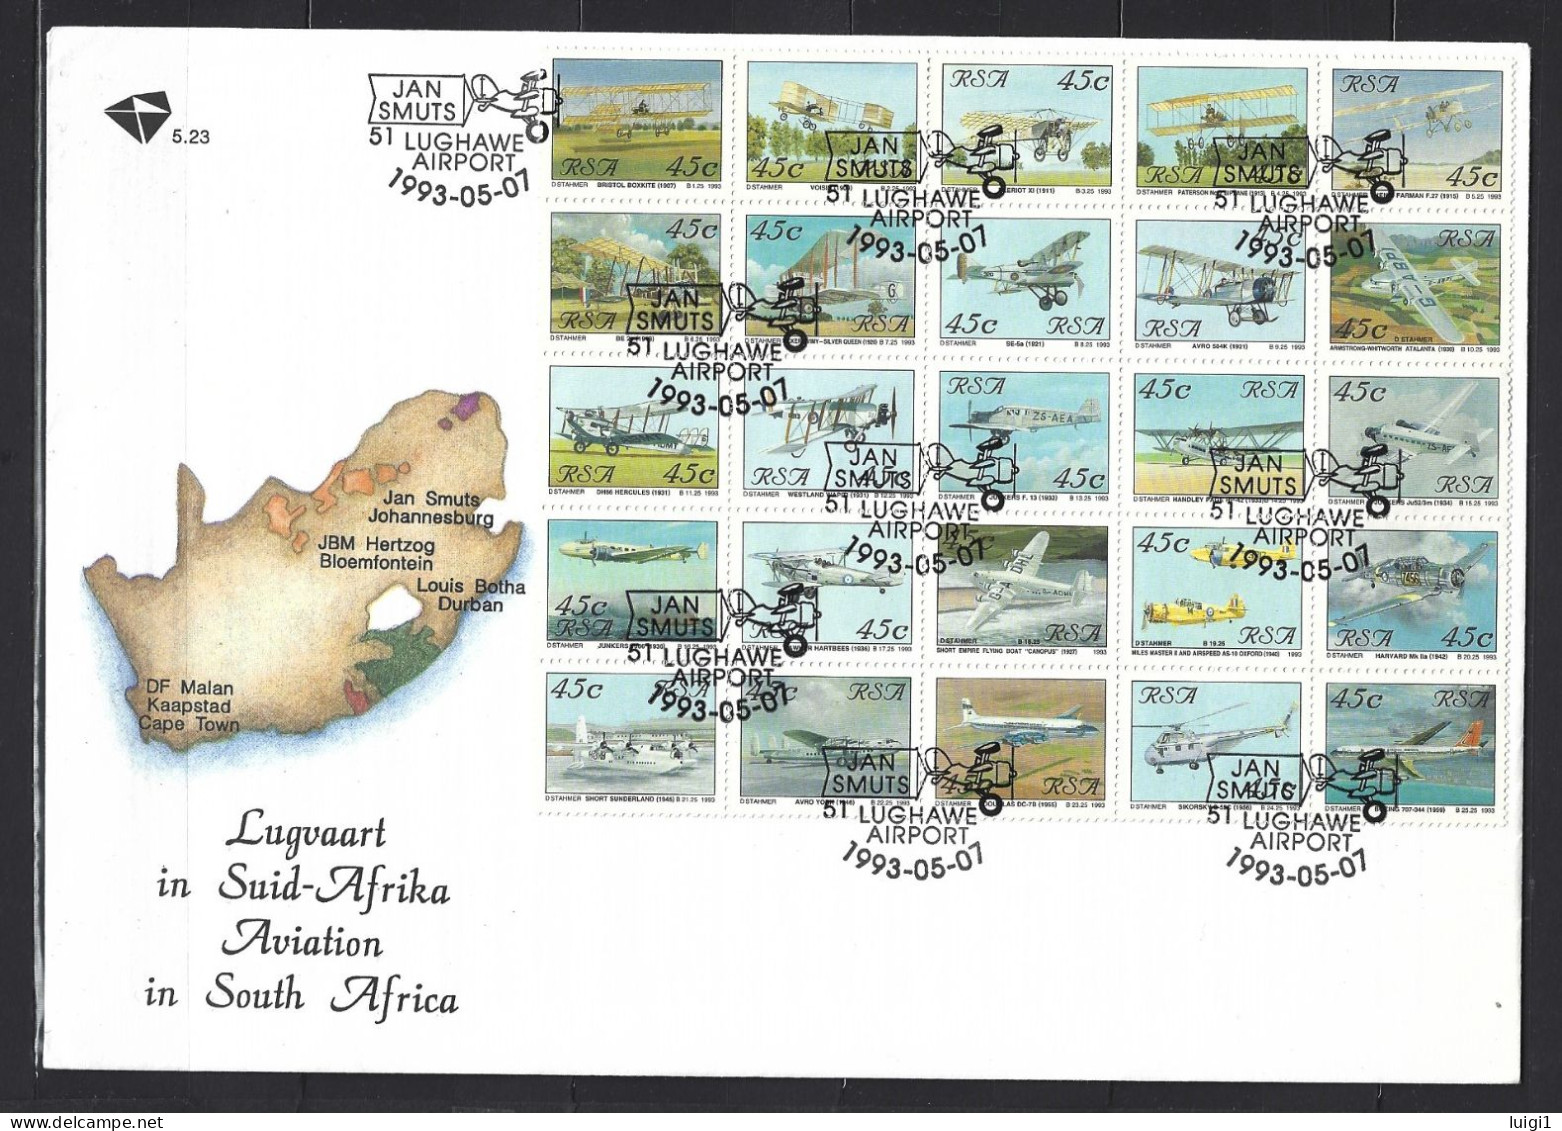 SOUTH AFRICA1993 - Bloc-feuillet Aviation Sud Africaine . Oblitération Du 1993-05-07. JAN SMUTS 51 LUGHAWE AIRPORT. - Lettres & Documents